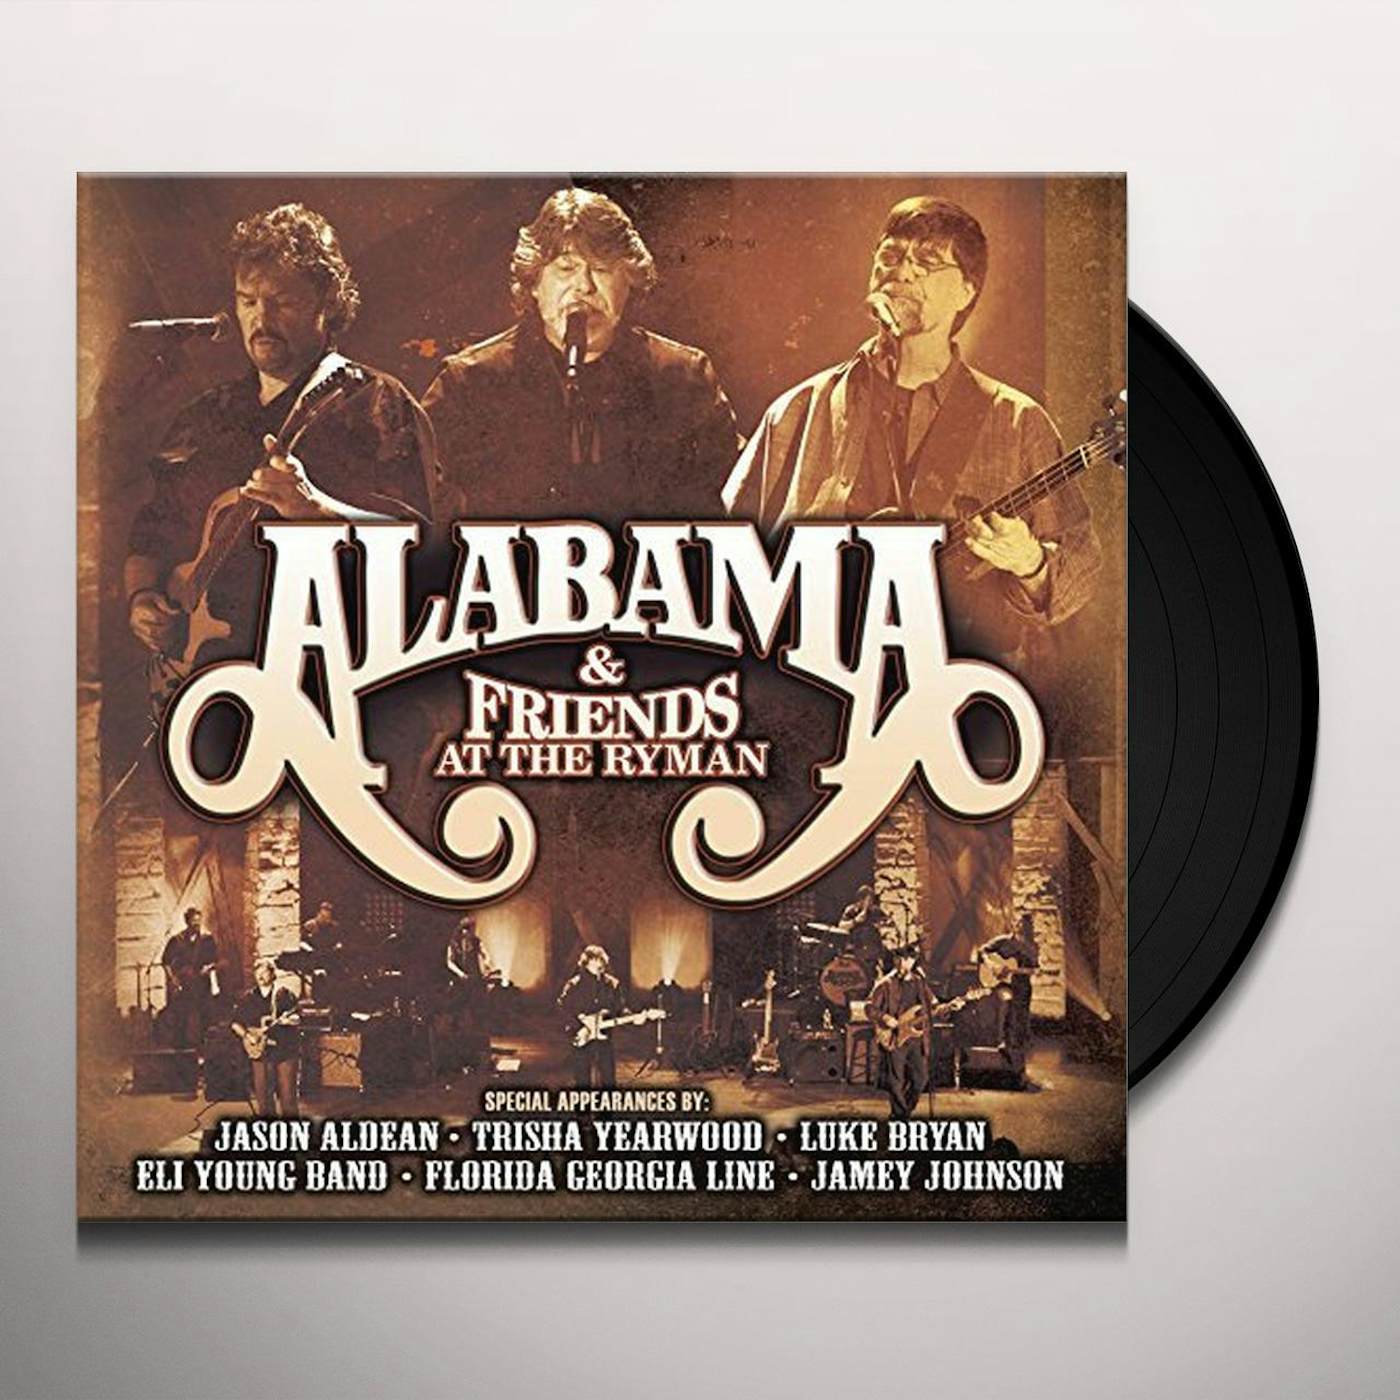 Alabama & friends AT THE RYMAN LIMITED EDITION Vinyl Record